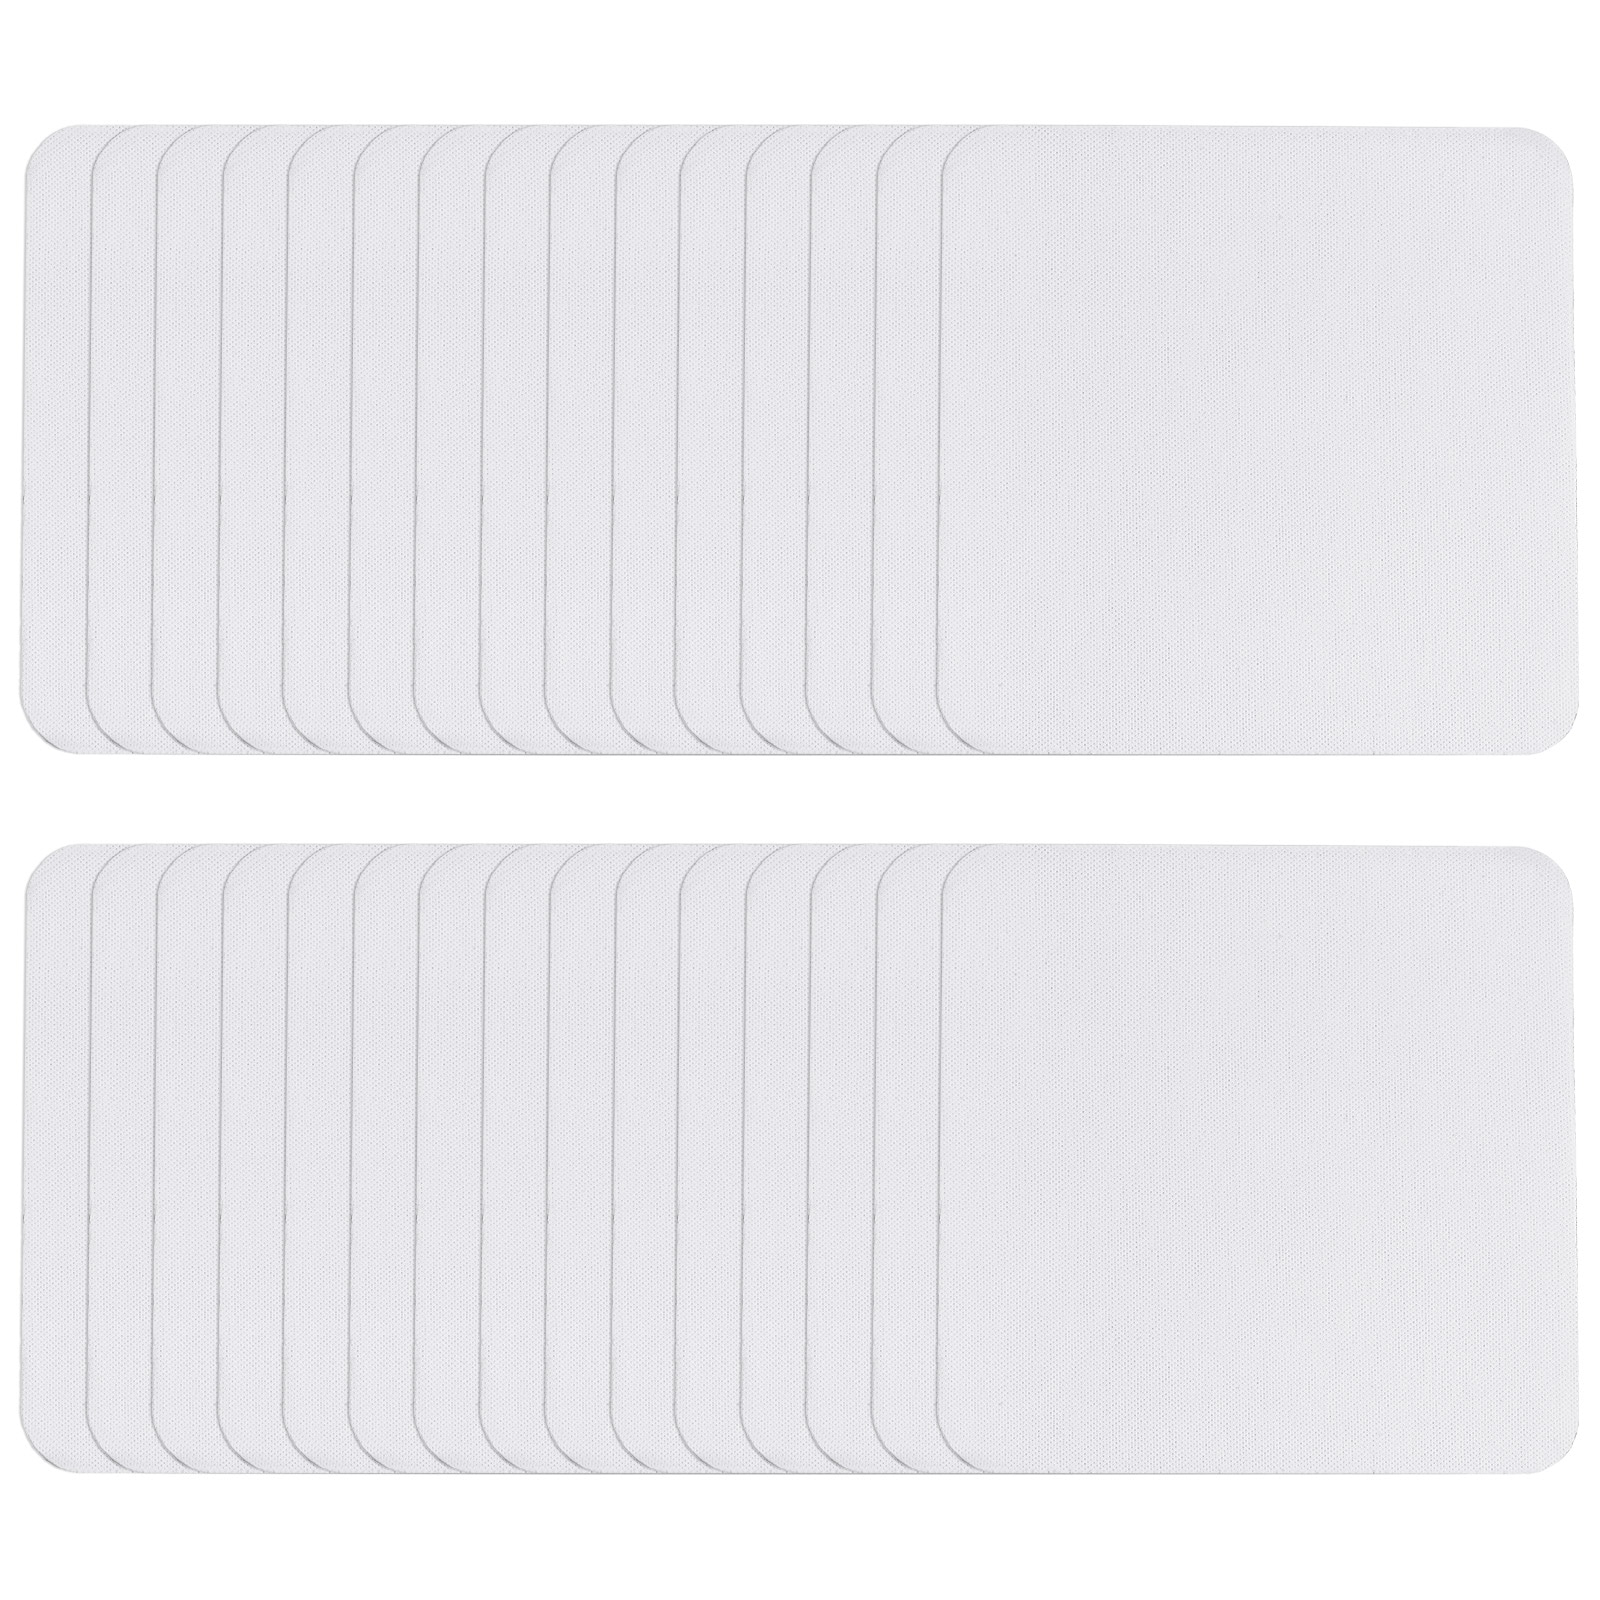 30pcs Sublimation Coasters Blanks Round Shape - White - Bed Bath & Beyond -  37973911